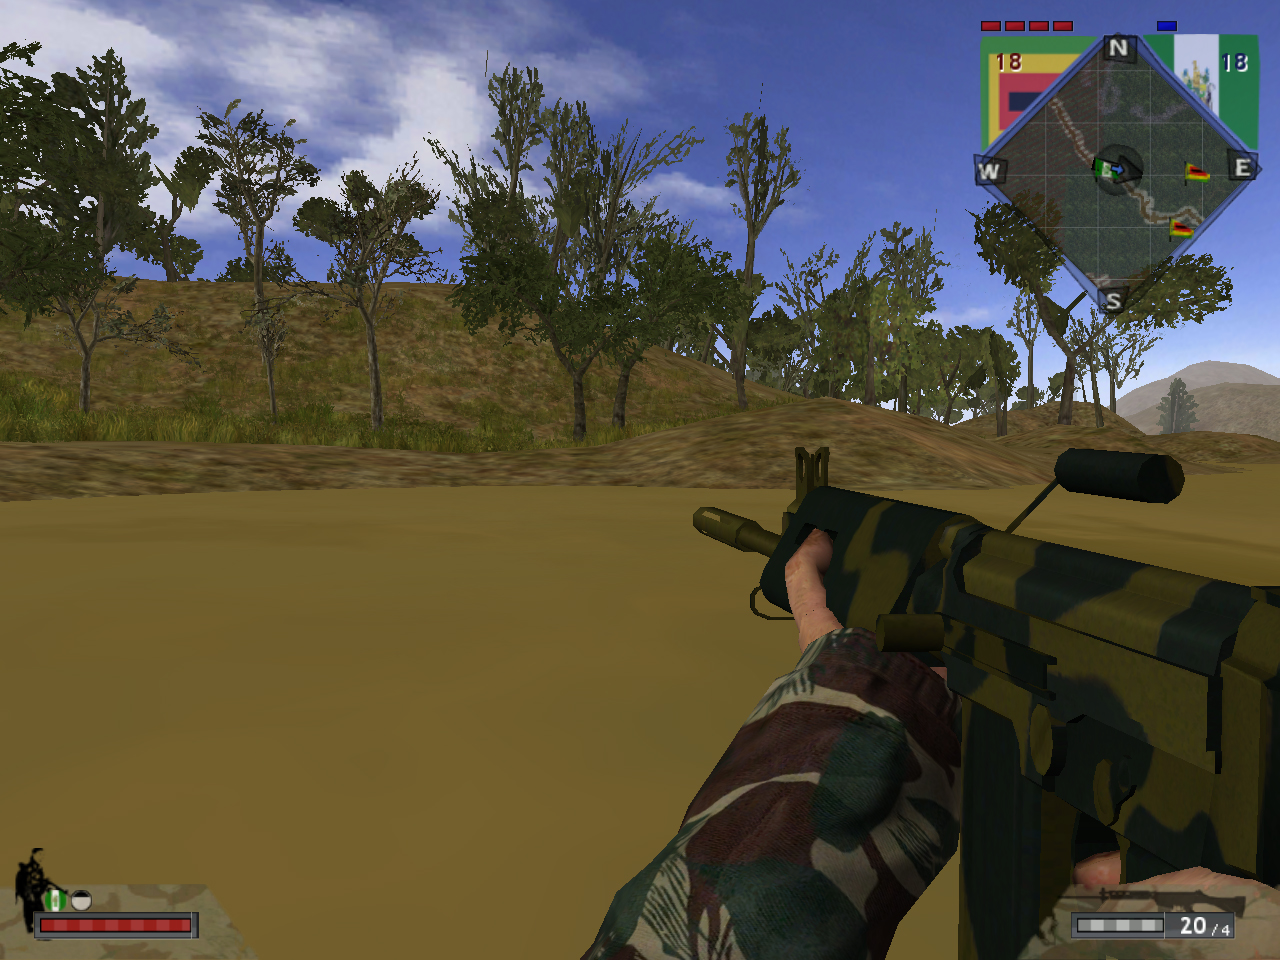 FN-FAL - New Camo image - Rhodesian Bush War mod for Battlefield Vietnam